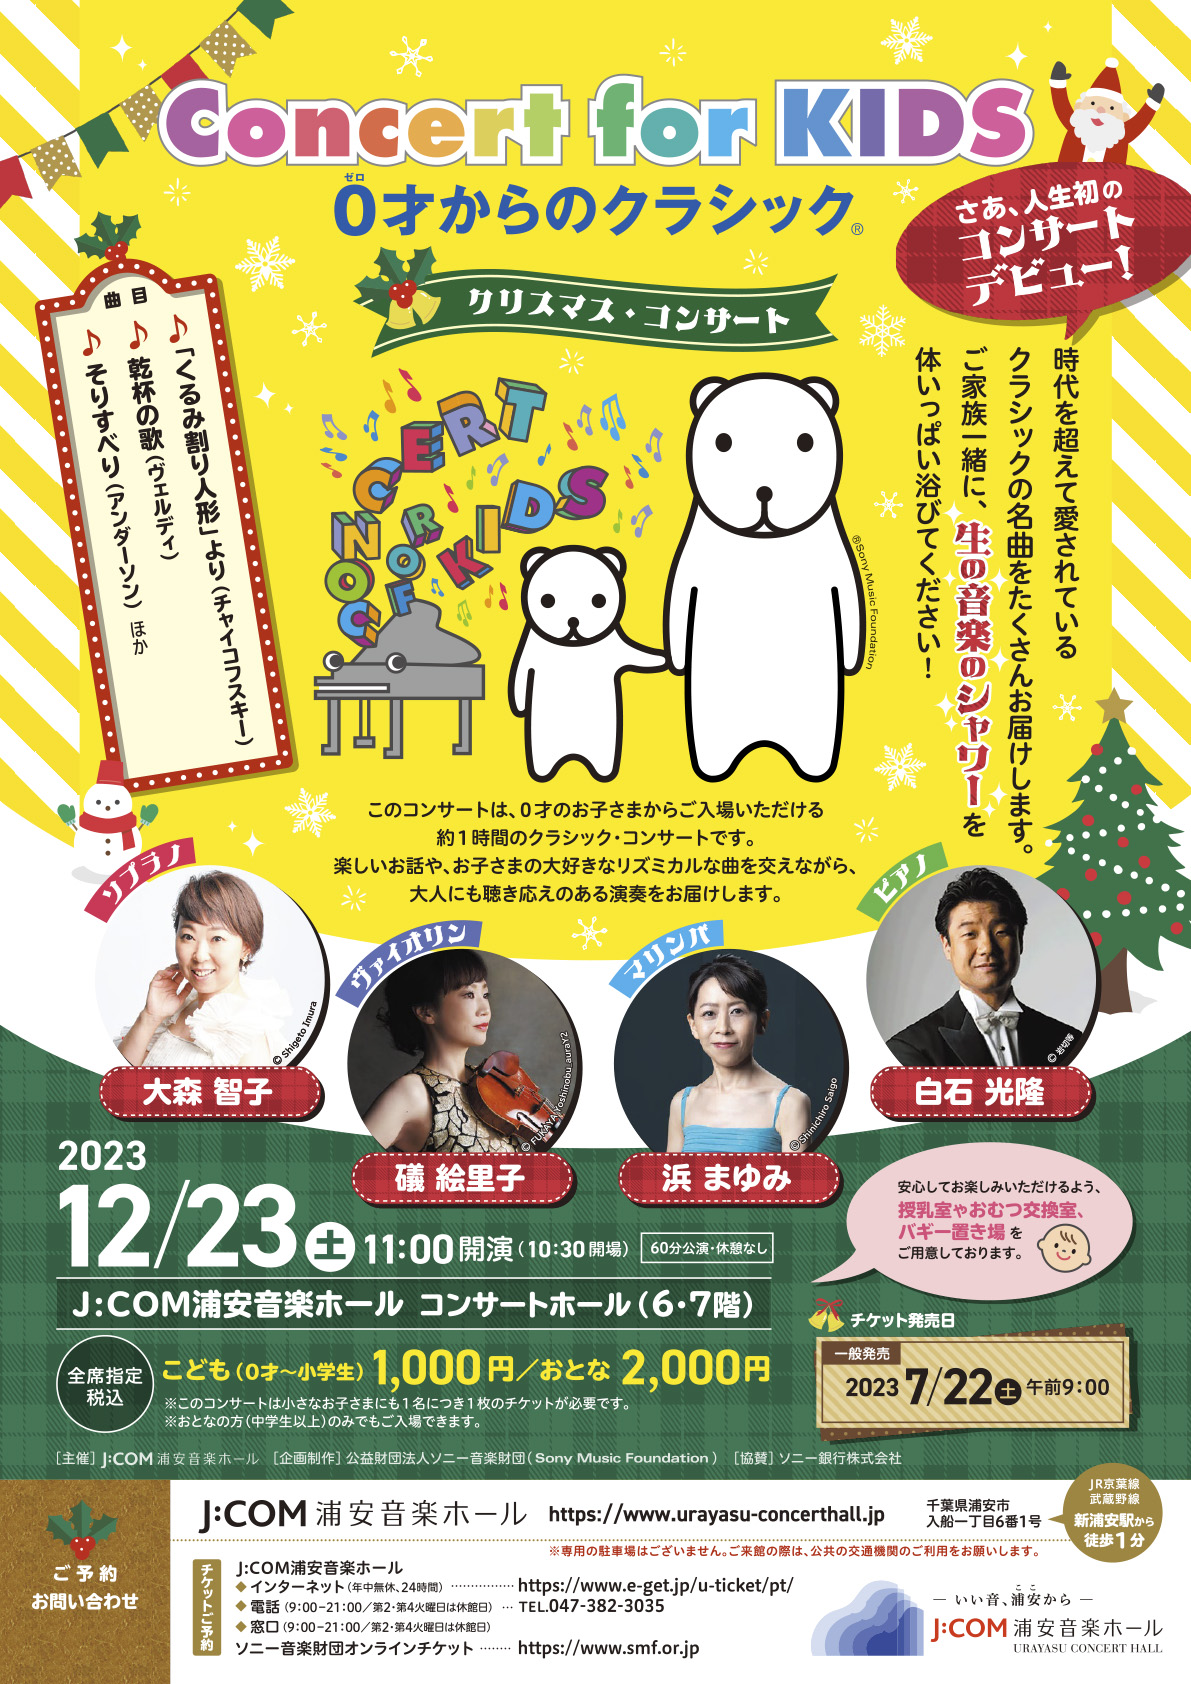 Concert for KIDS〜0才からのクラシック®〜　クリスマス・コンサート